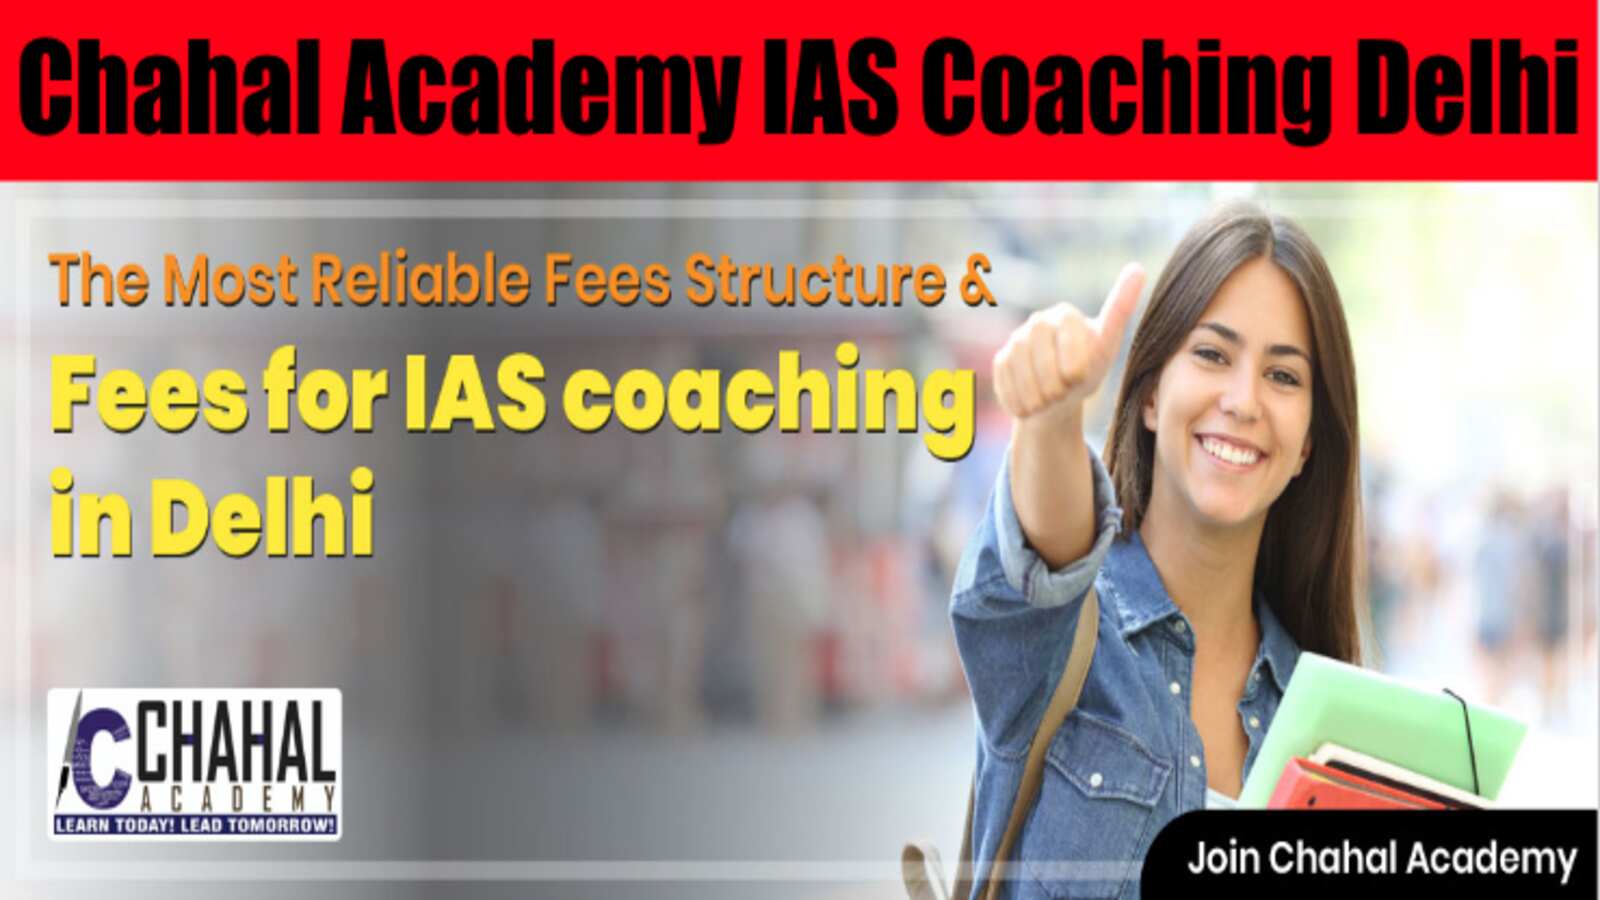 Chahal Academy IAS Coaching Delhi